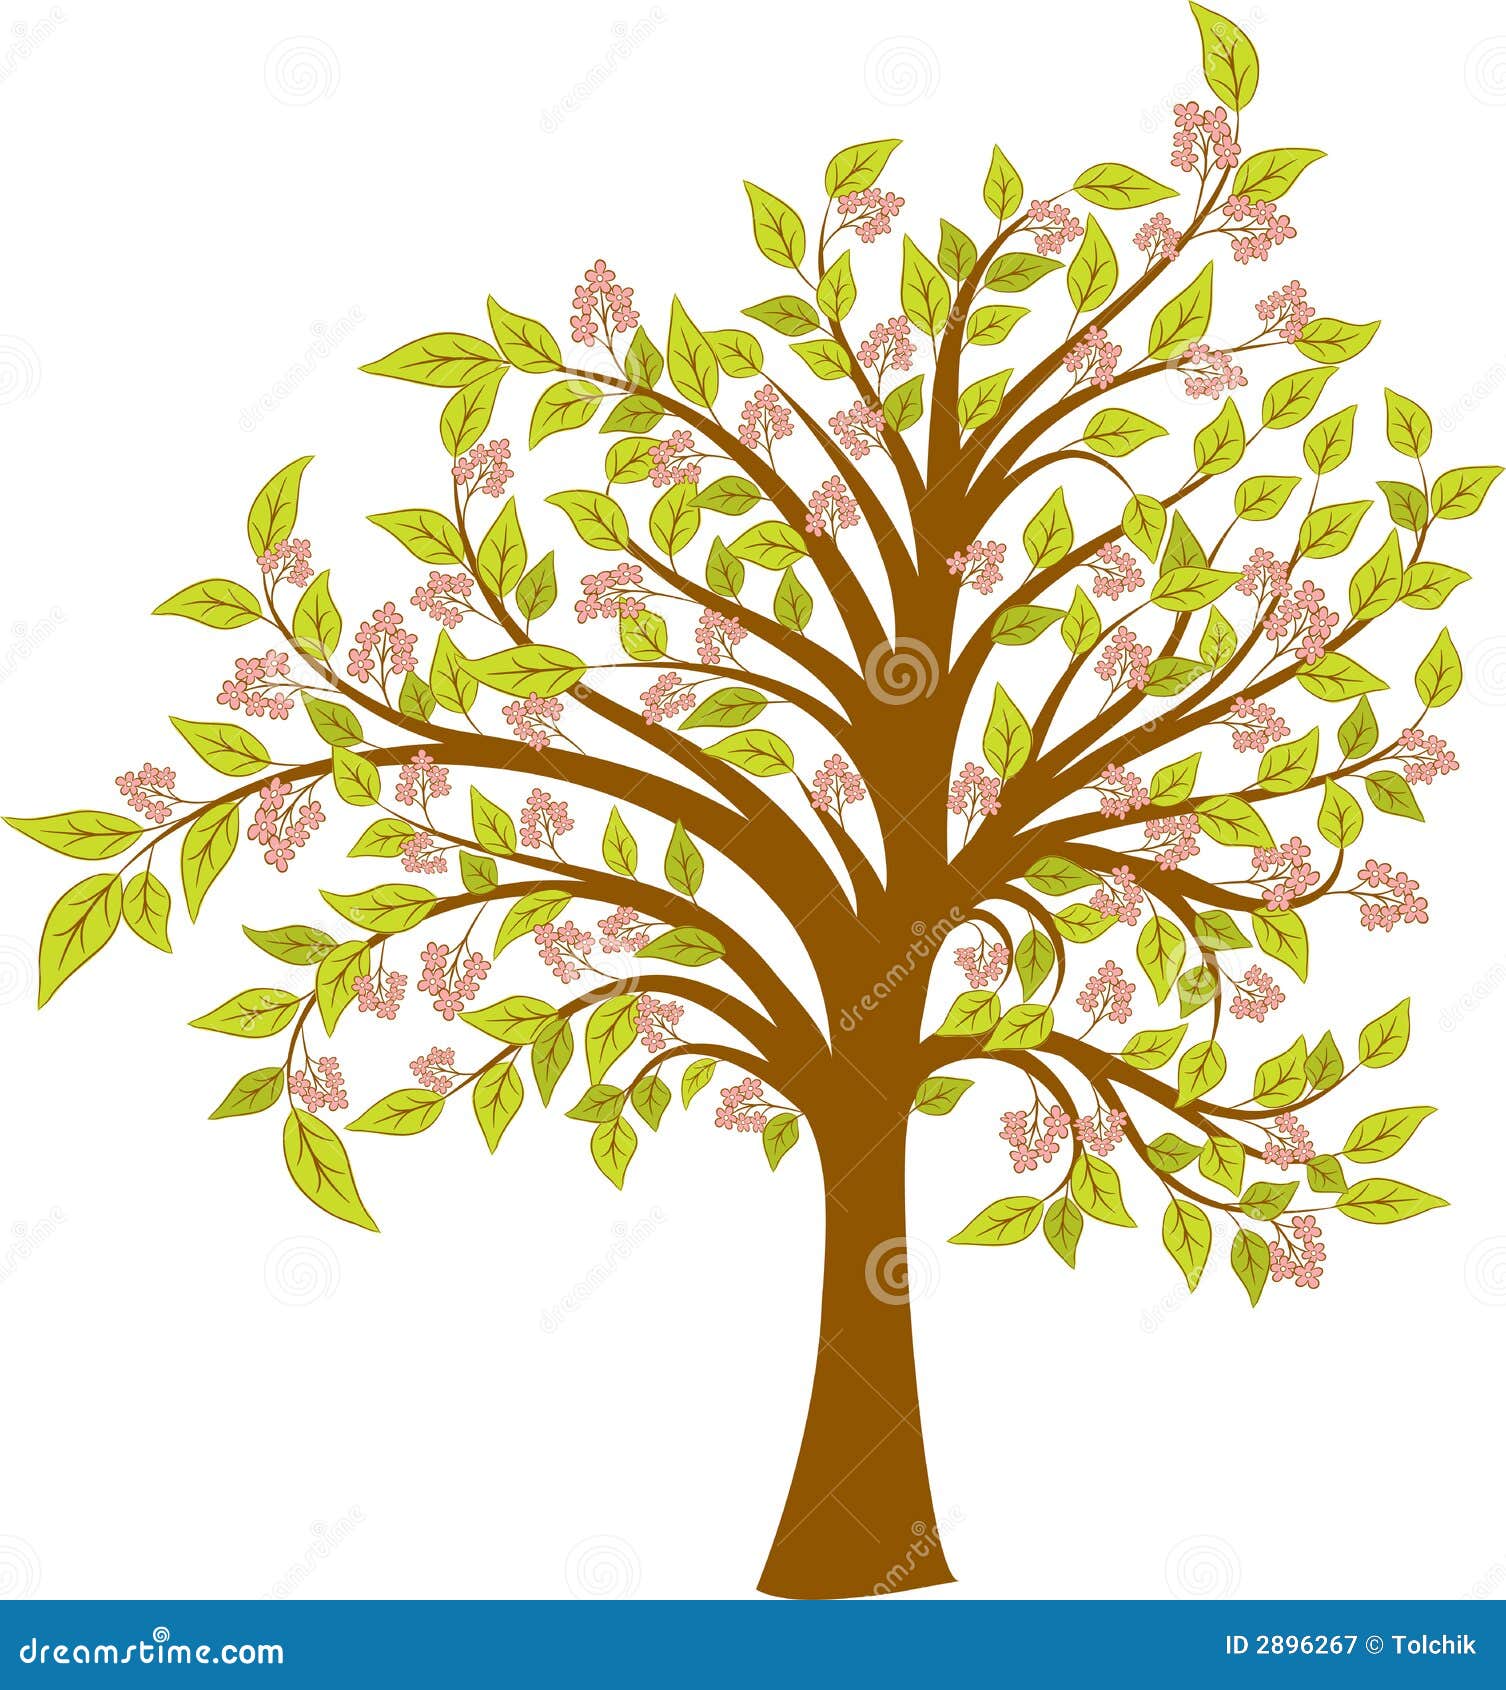 Spring Blossoming Tree Vector Stock Vector Illustration Of Ornament Branch